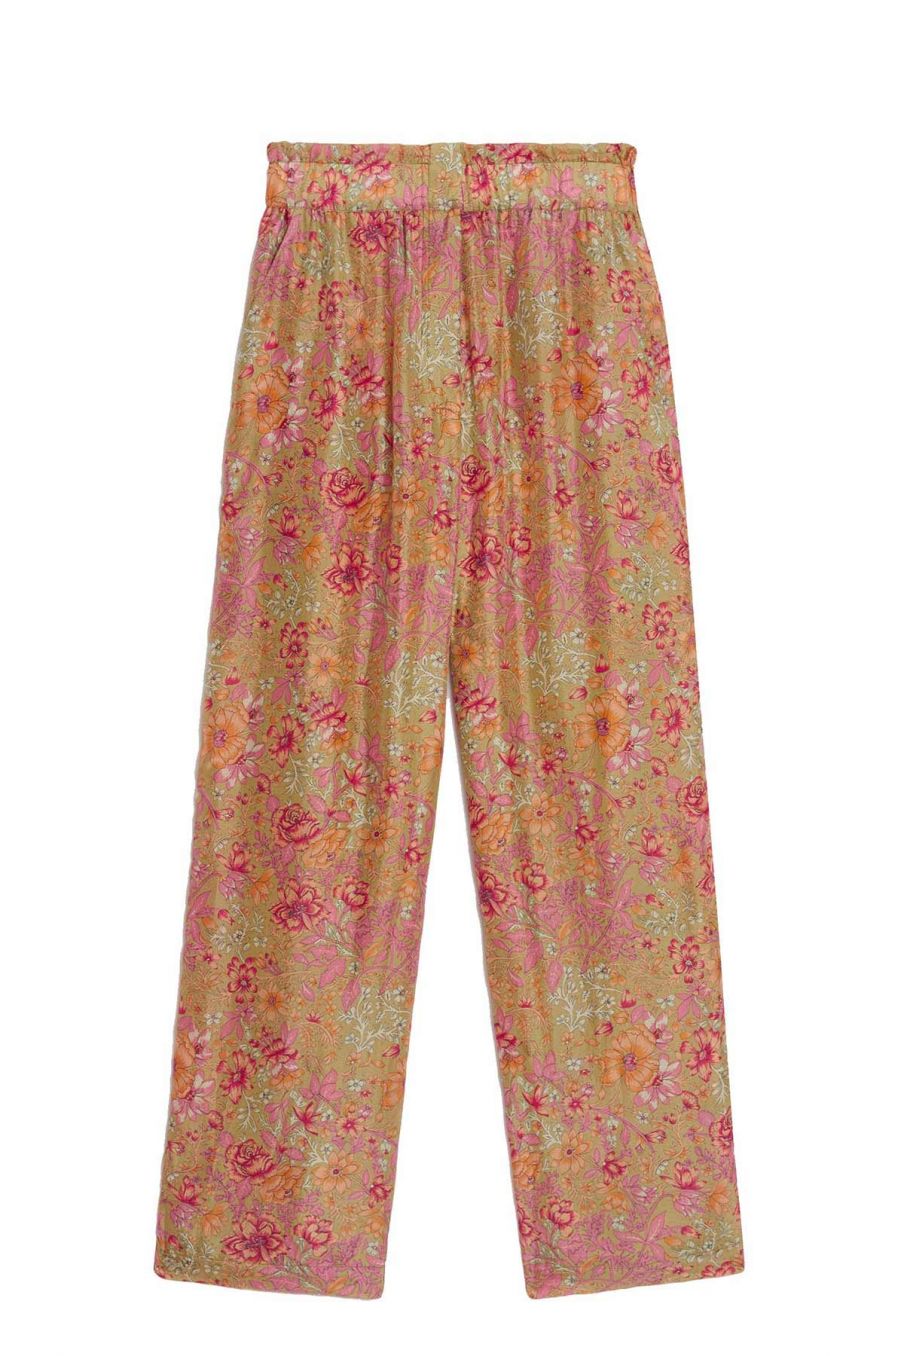 women-pants-arloew-khaki-multi-flowers